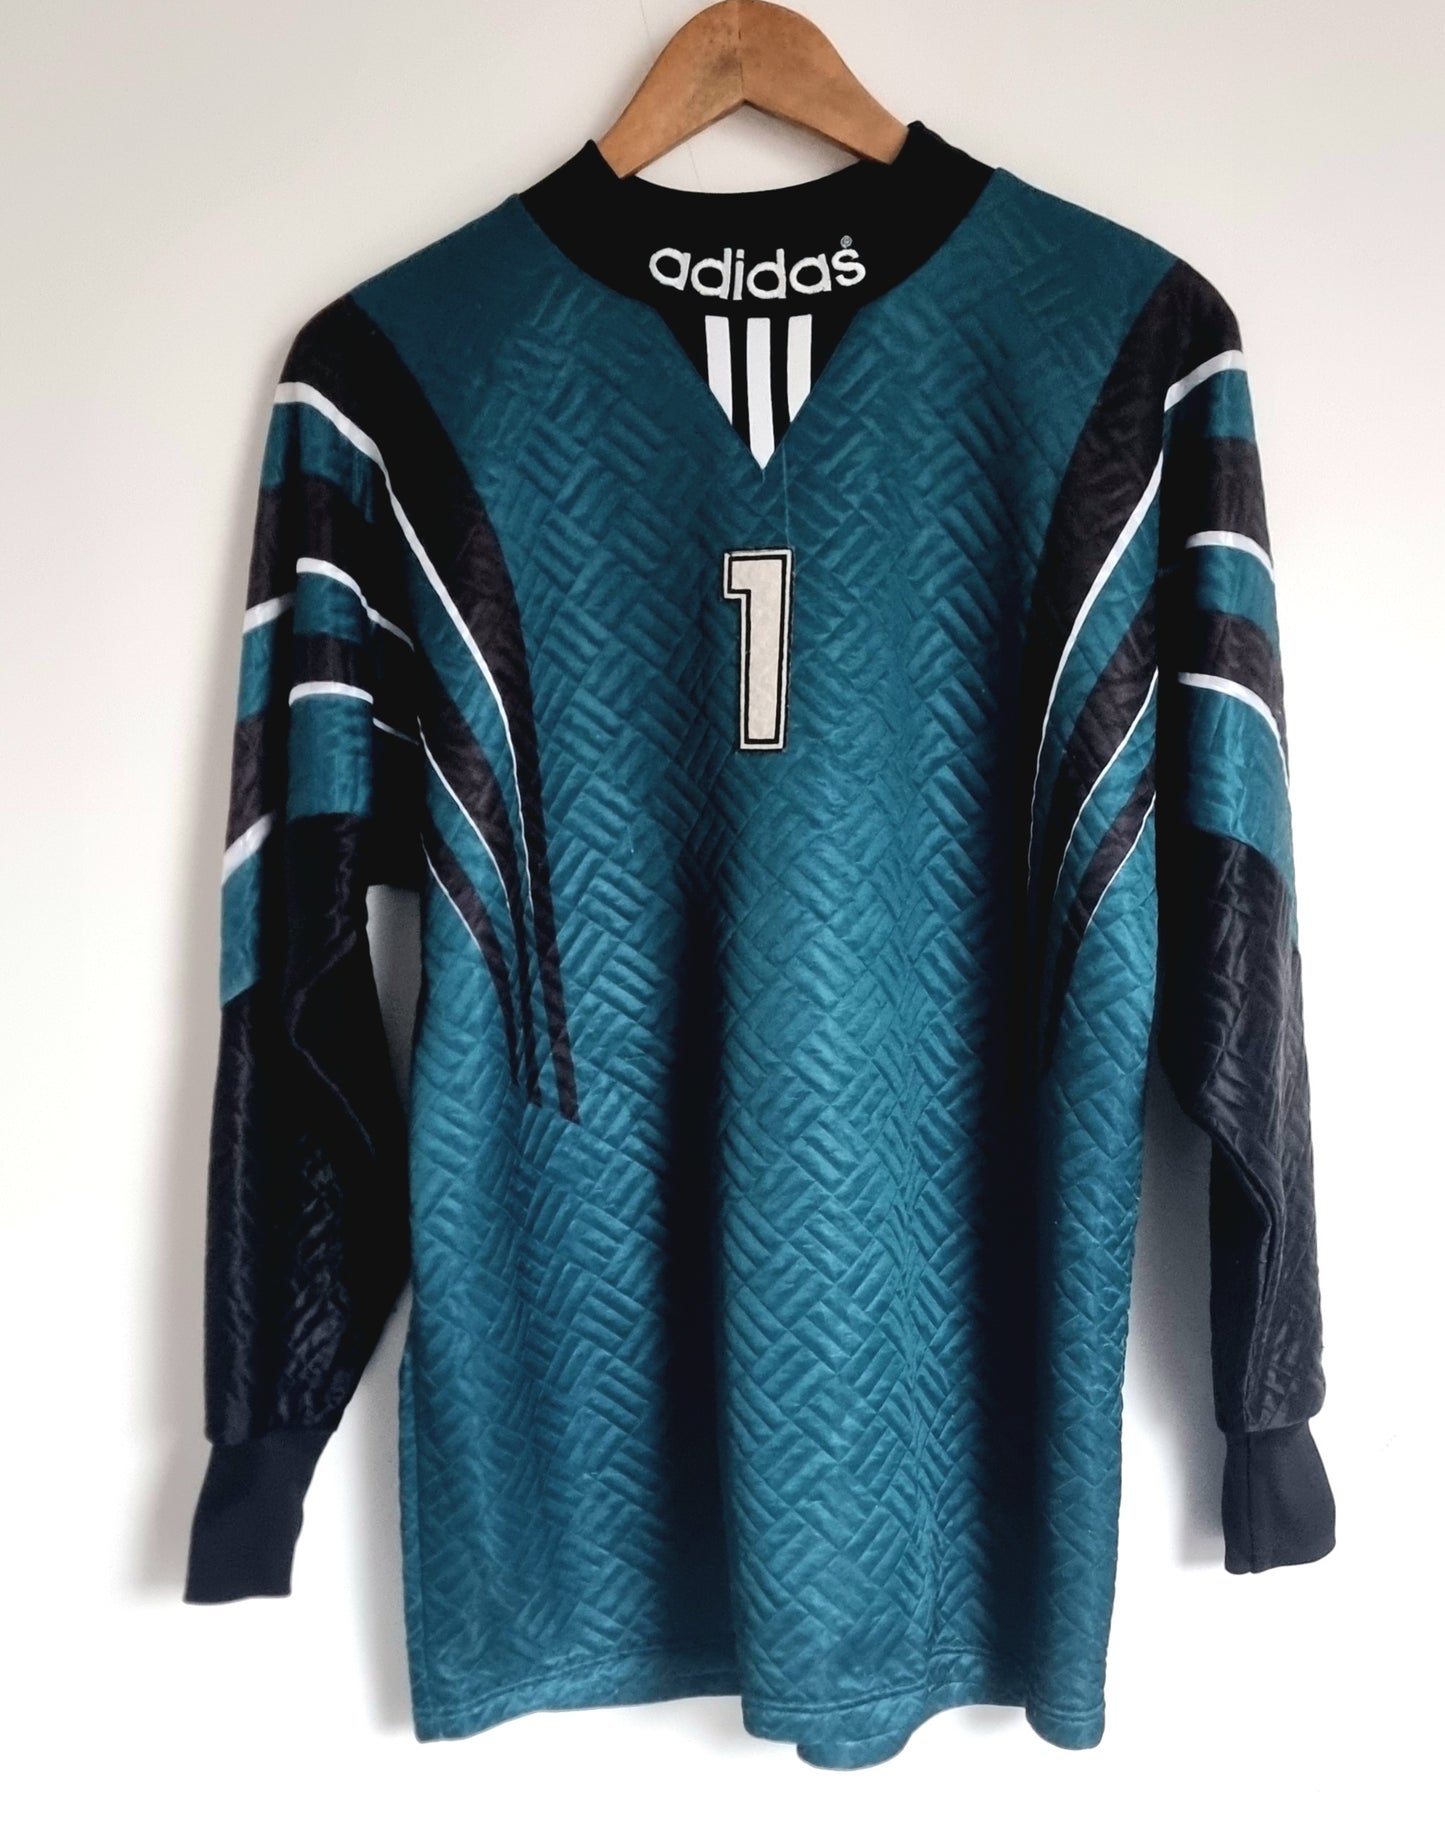 Adidas 1990s Vintage Long Sleeve Goalkeeper Template Shirt Medium